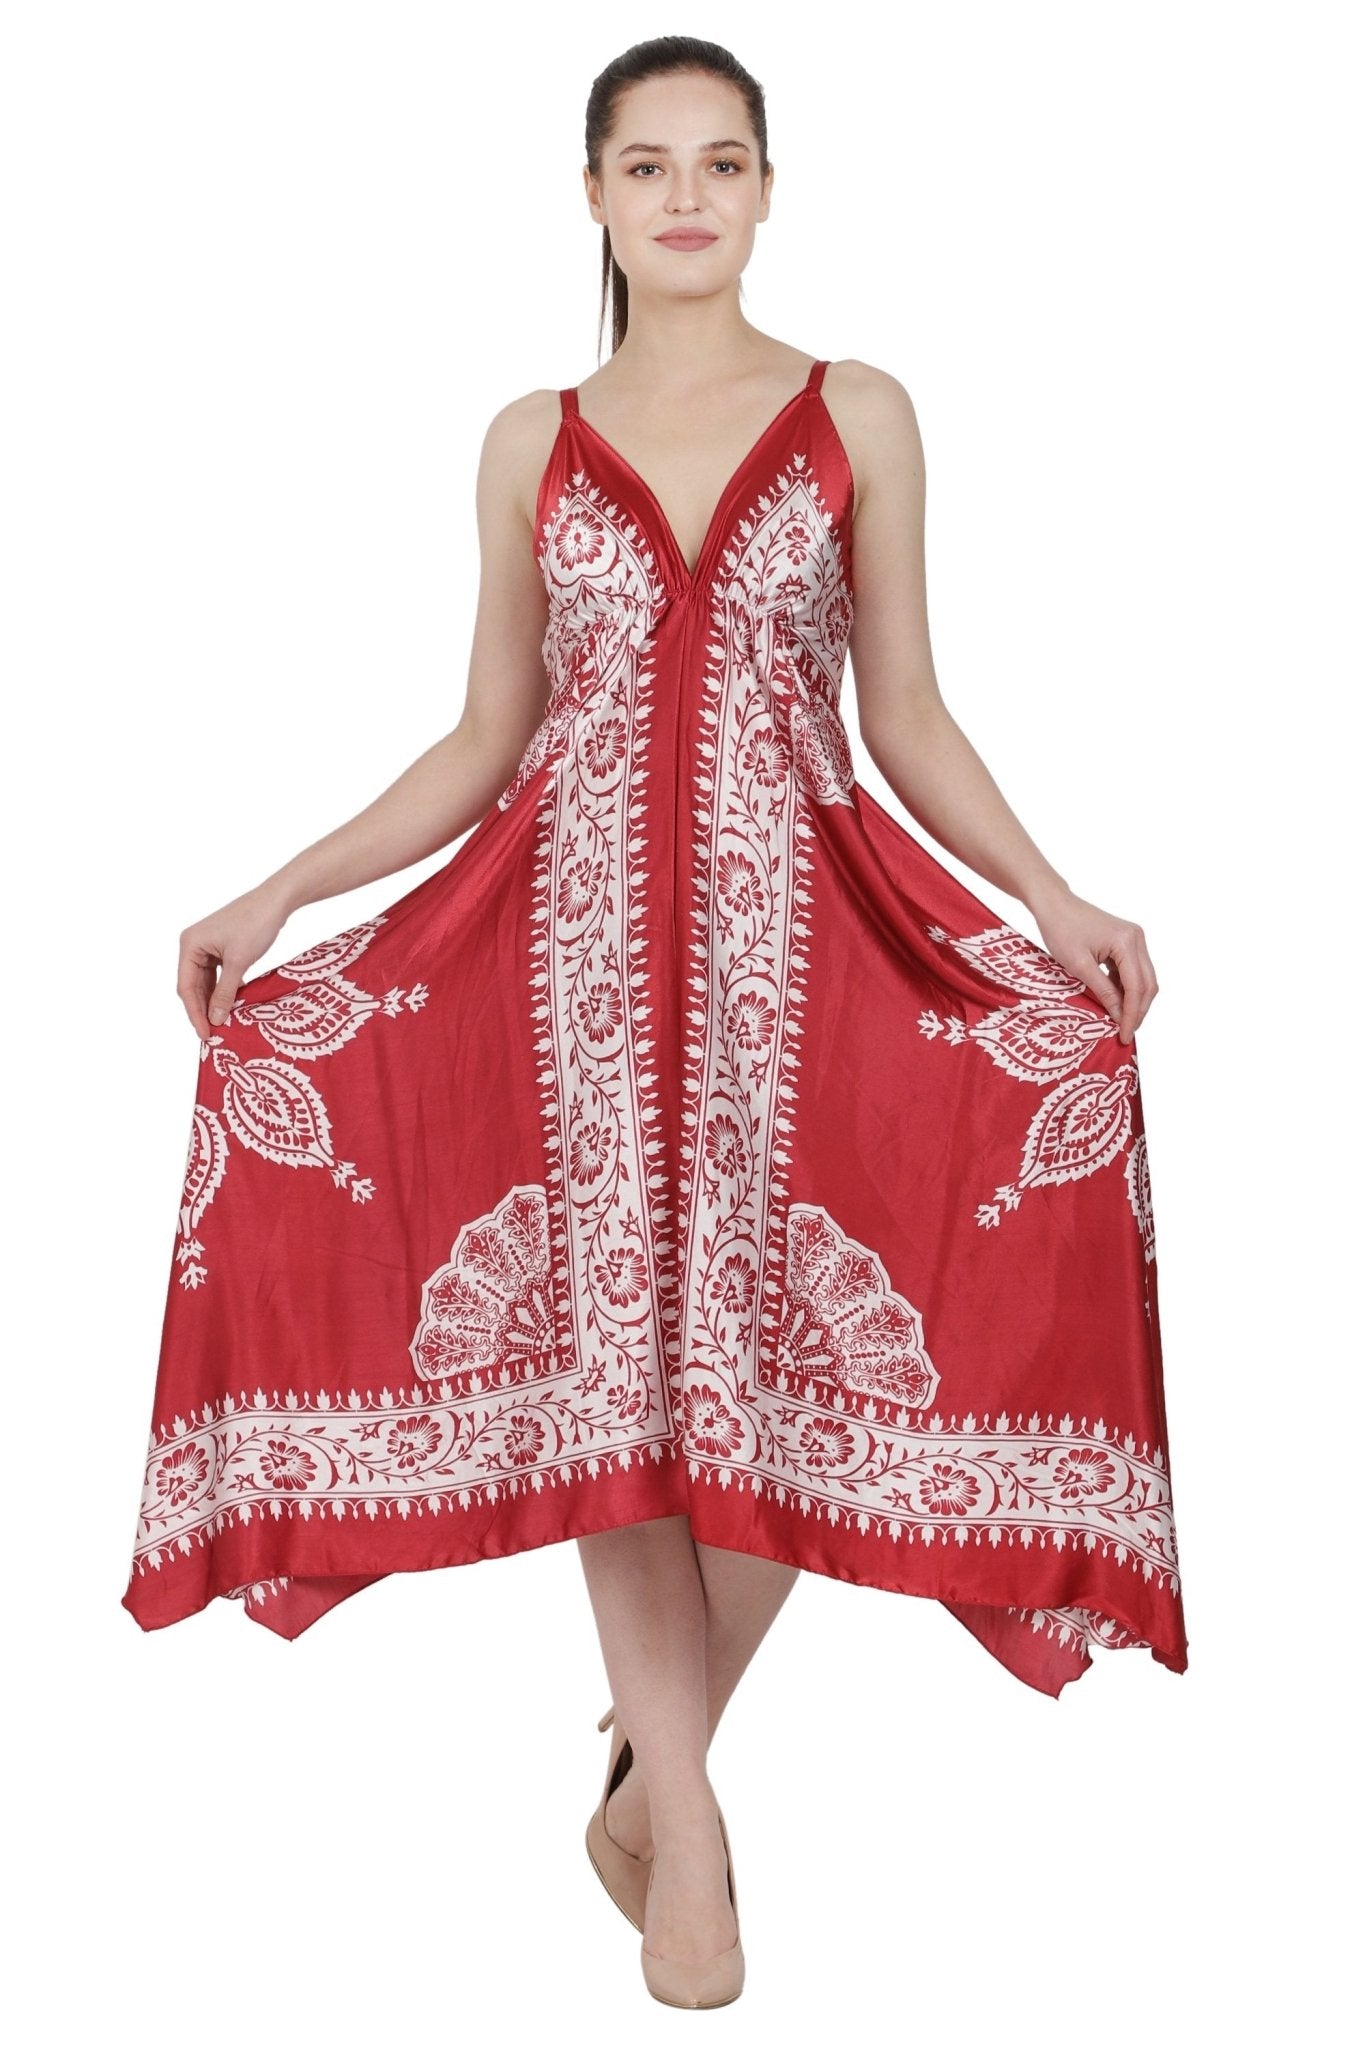 Batik Paisley Print Dress Elastic Back One Size Fits Most S-923 - Advance Apparels Inc